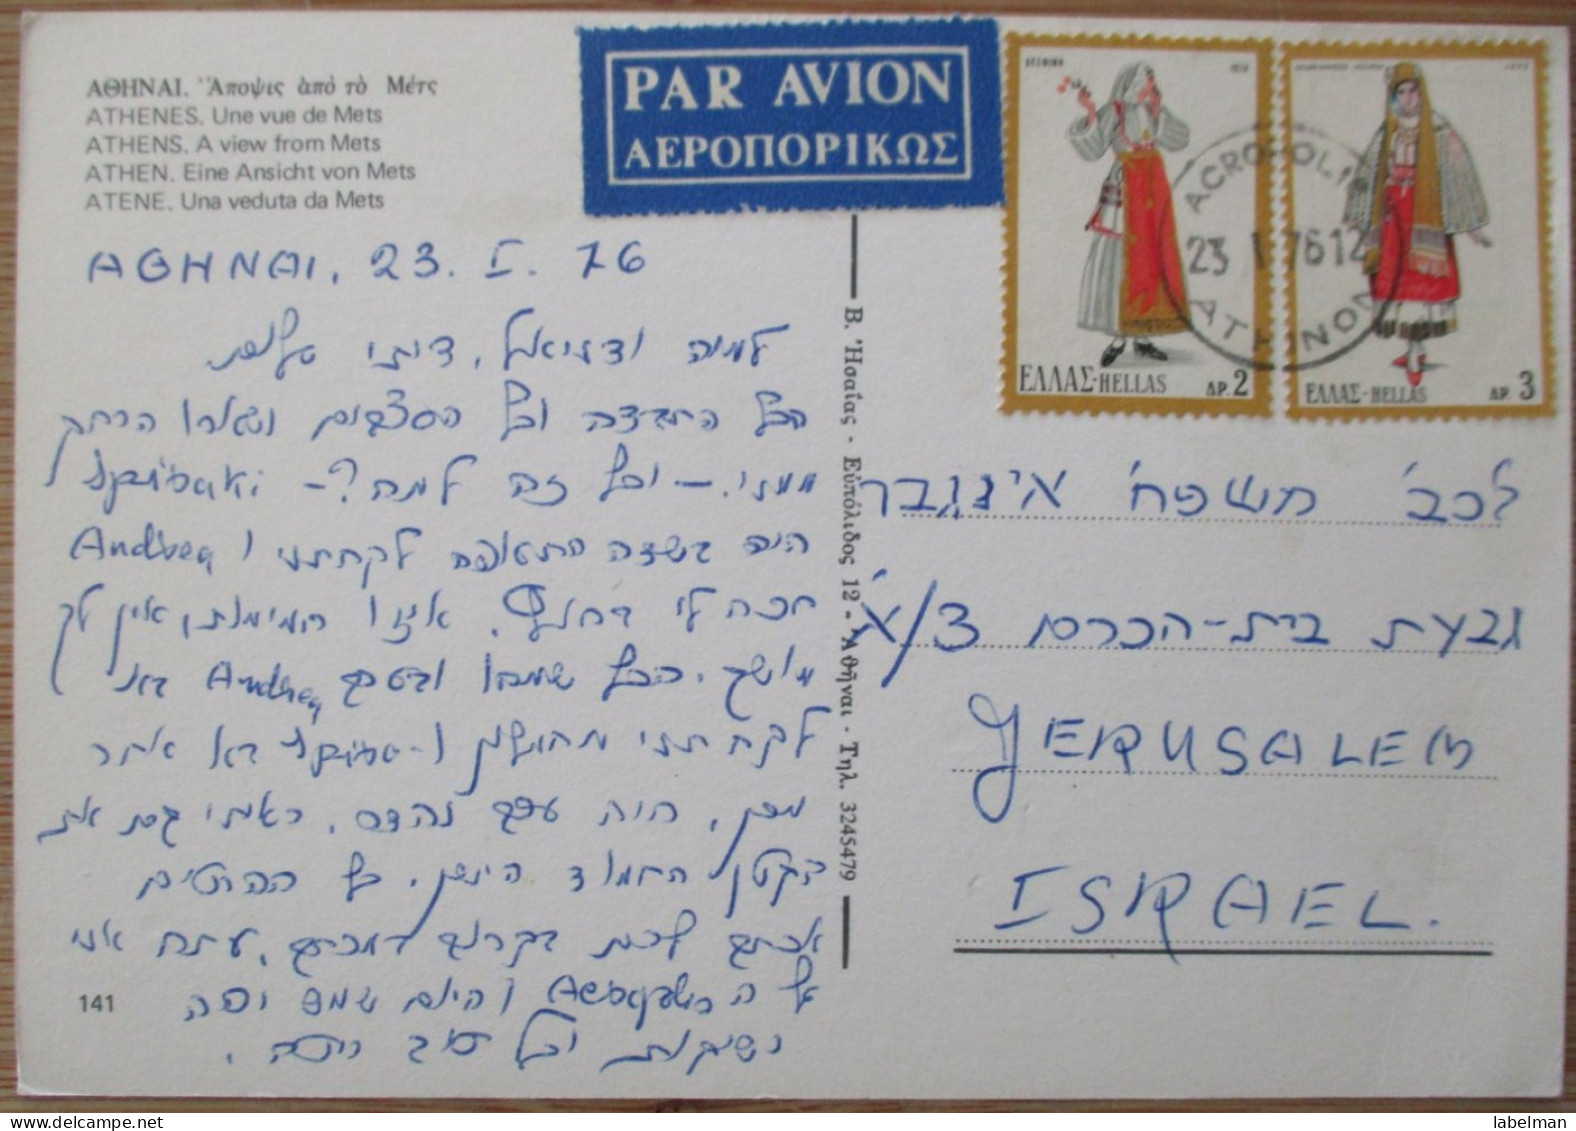 GREECE ATHENS ACROPOLIS POSTCARD ANSICHTSKARTE PICTURE CARTOLINA CARTE POSTALE POSTKARTE KARTE  CARD - Grèce